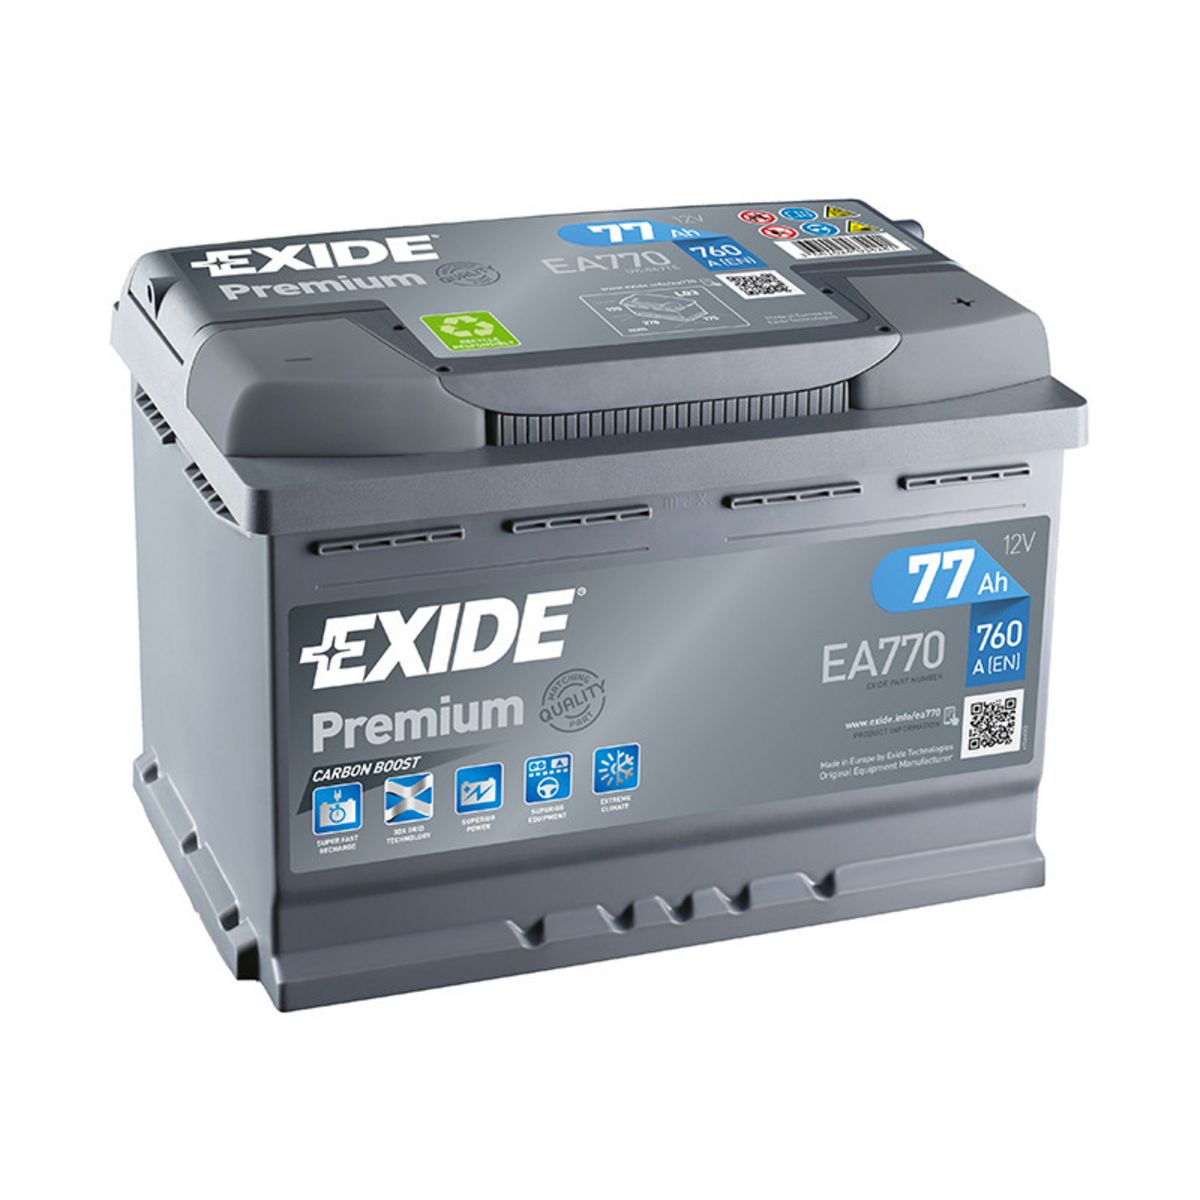 EXIDE Batterie Exide Premium EA770 12v 77AH 760A FA770 pas cher 